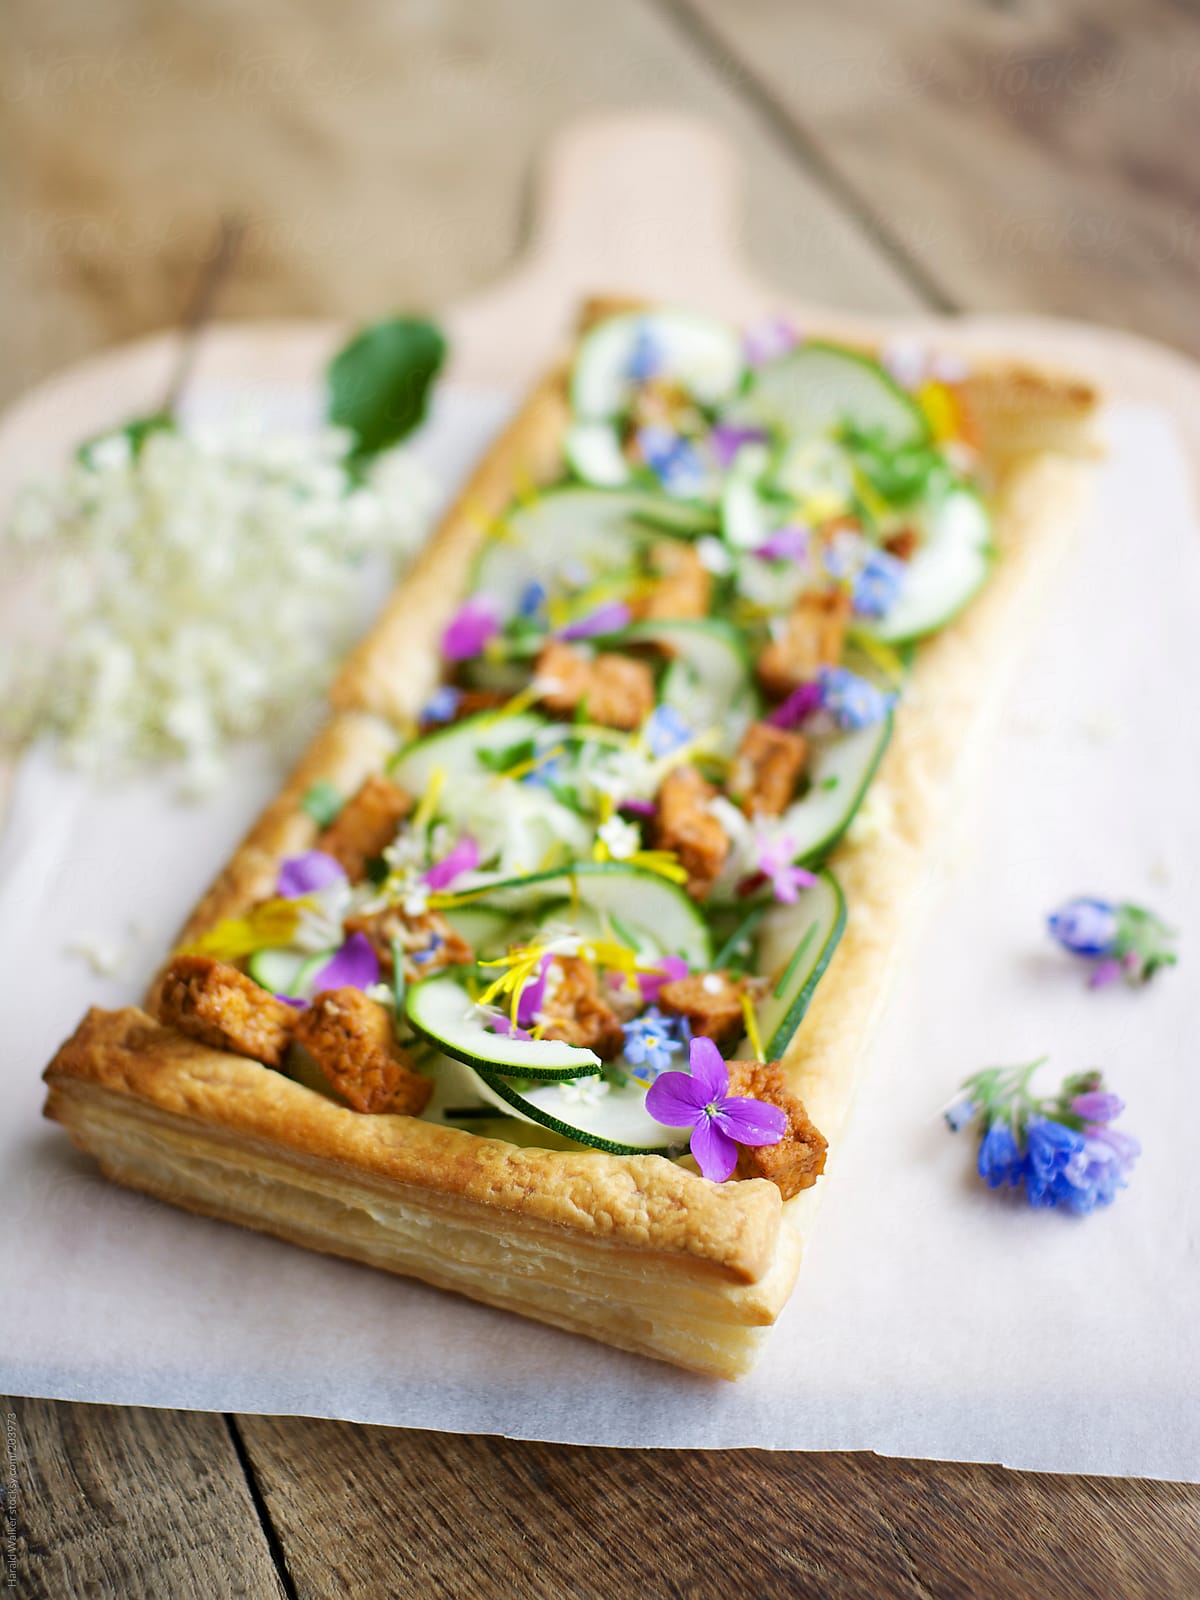 Springtime Zucchini Tart with Edible Flower Garnish